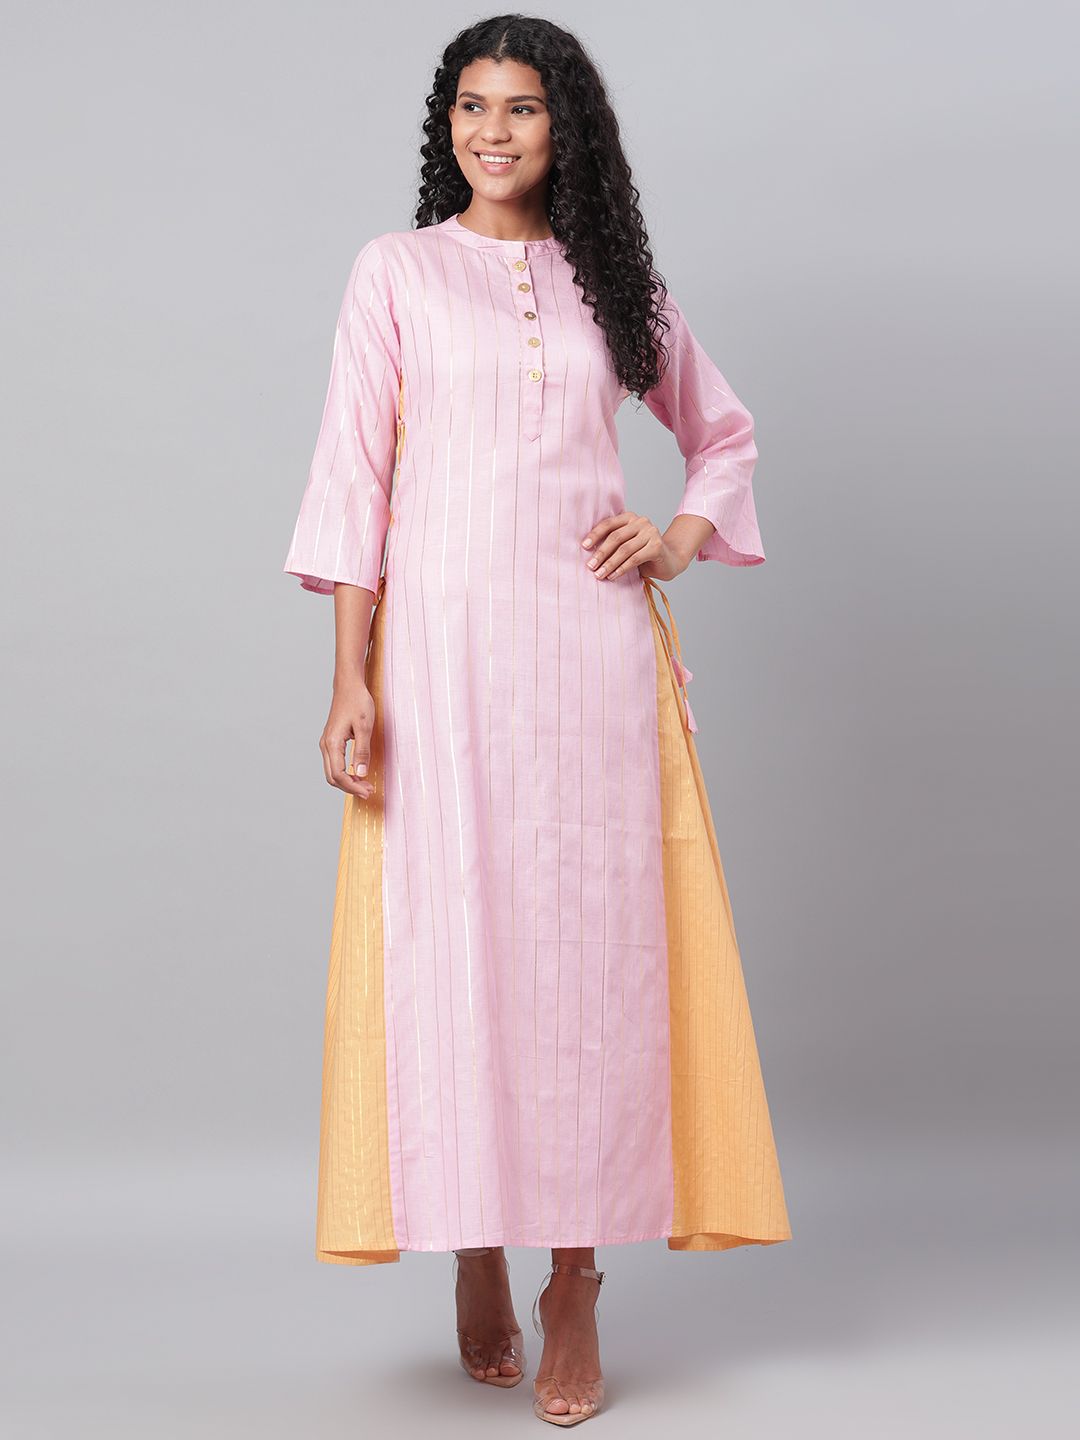 Myshka Women Pink & Golden Striped Maxi Dress Price in India